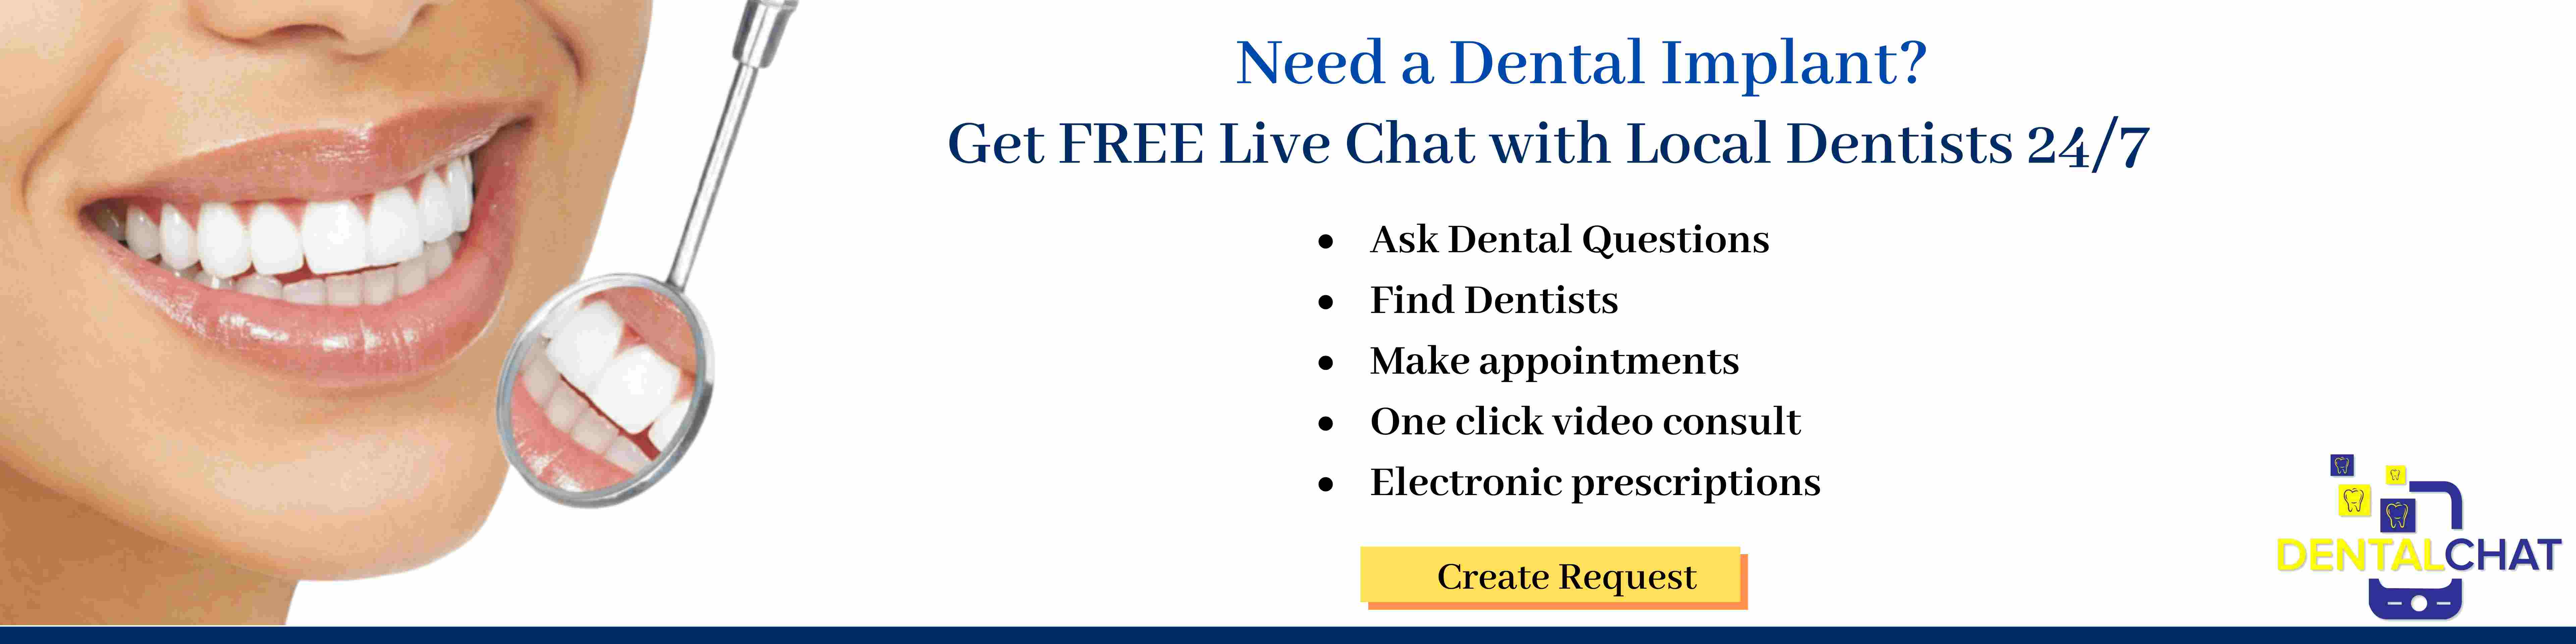 Best dental implants placement information